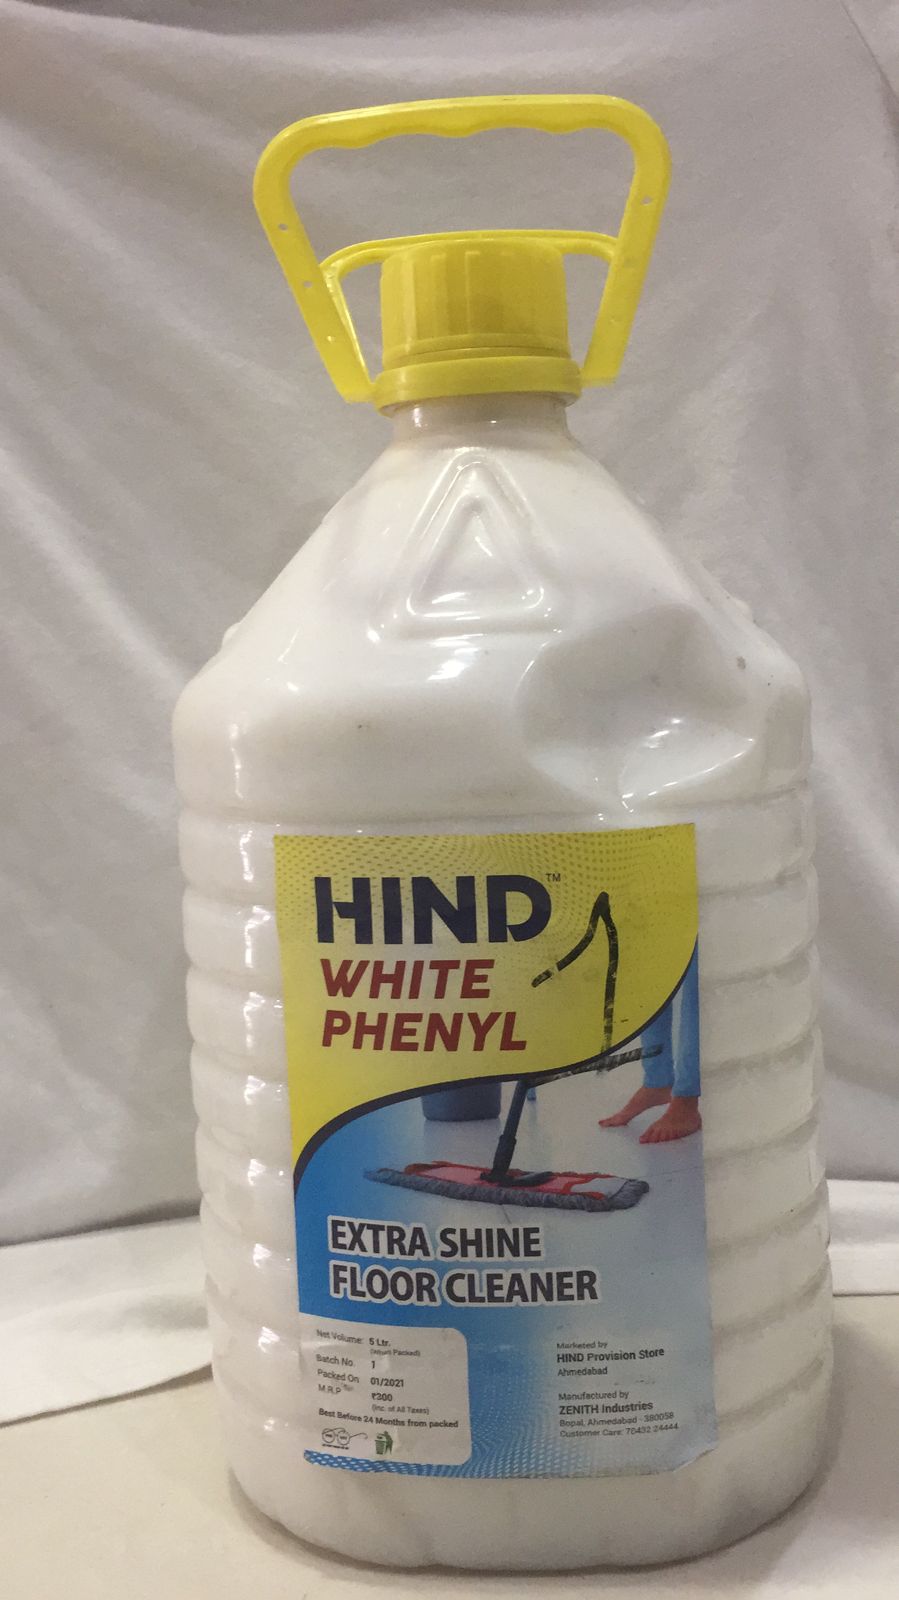 HIND WHITE PHENYL 5LTR